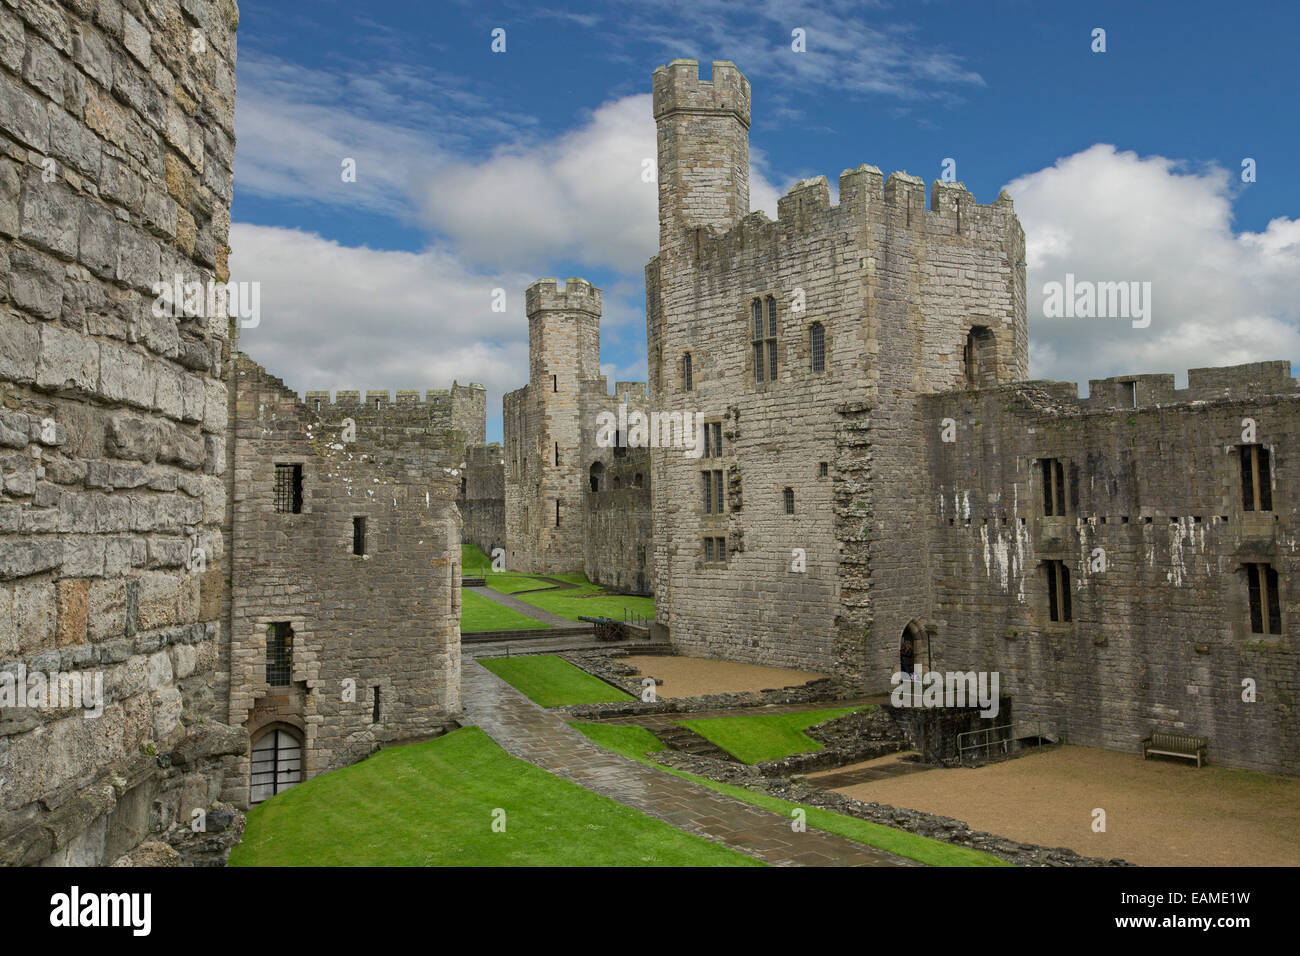 Spectacular interior of 13th century Caernarfon castle with huge walls & high towers around grassy courtyard under blue sky Stock Photo